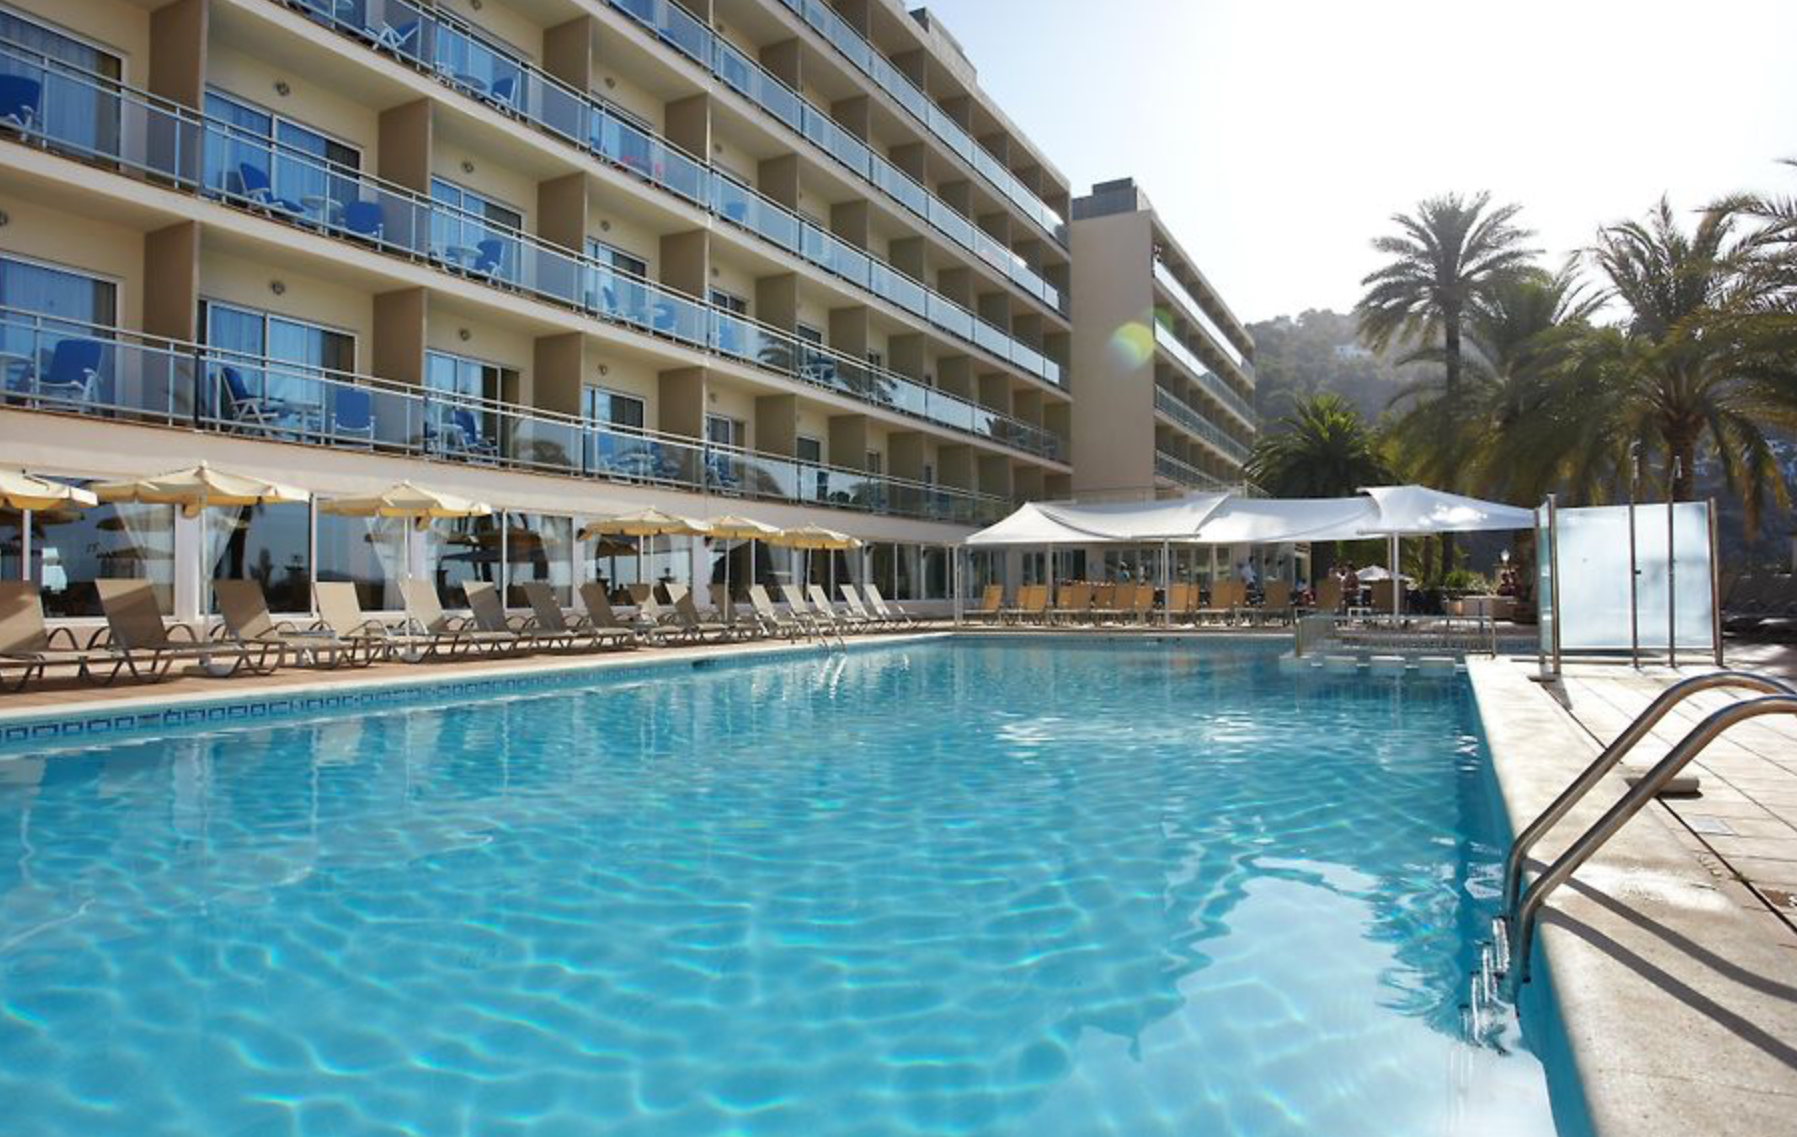 Hotel Grupotel Cala San Vicente - Ibiza1